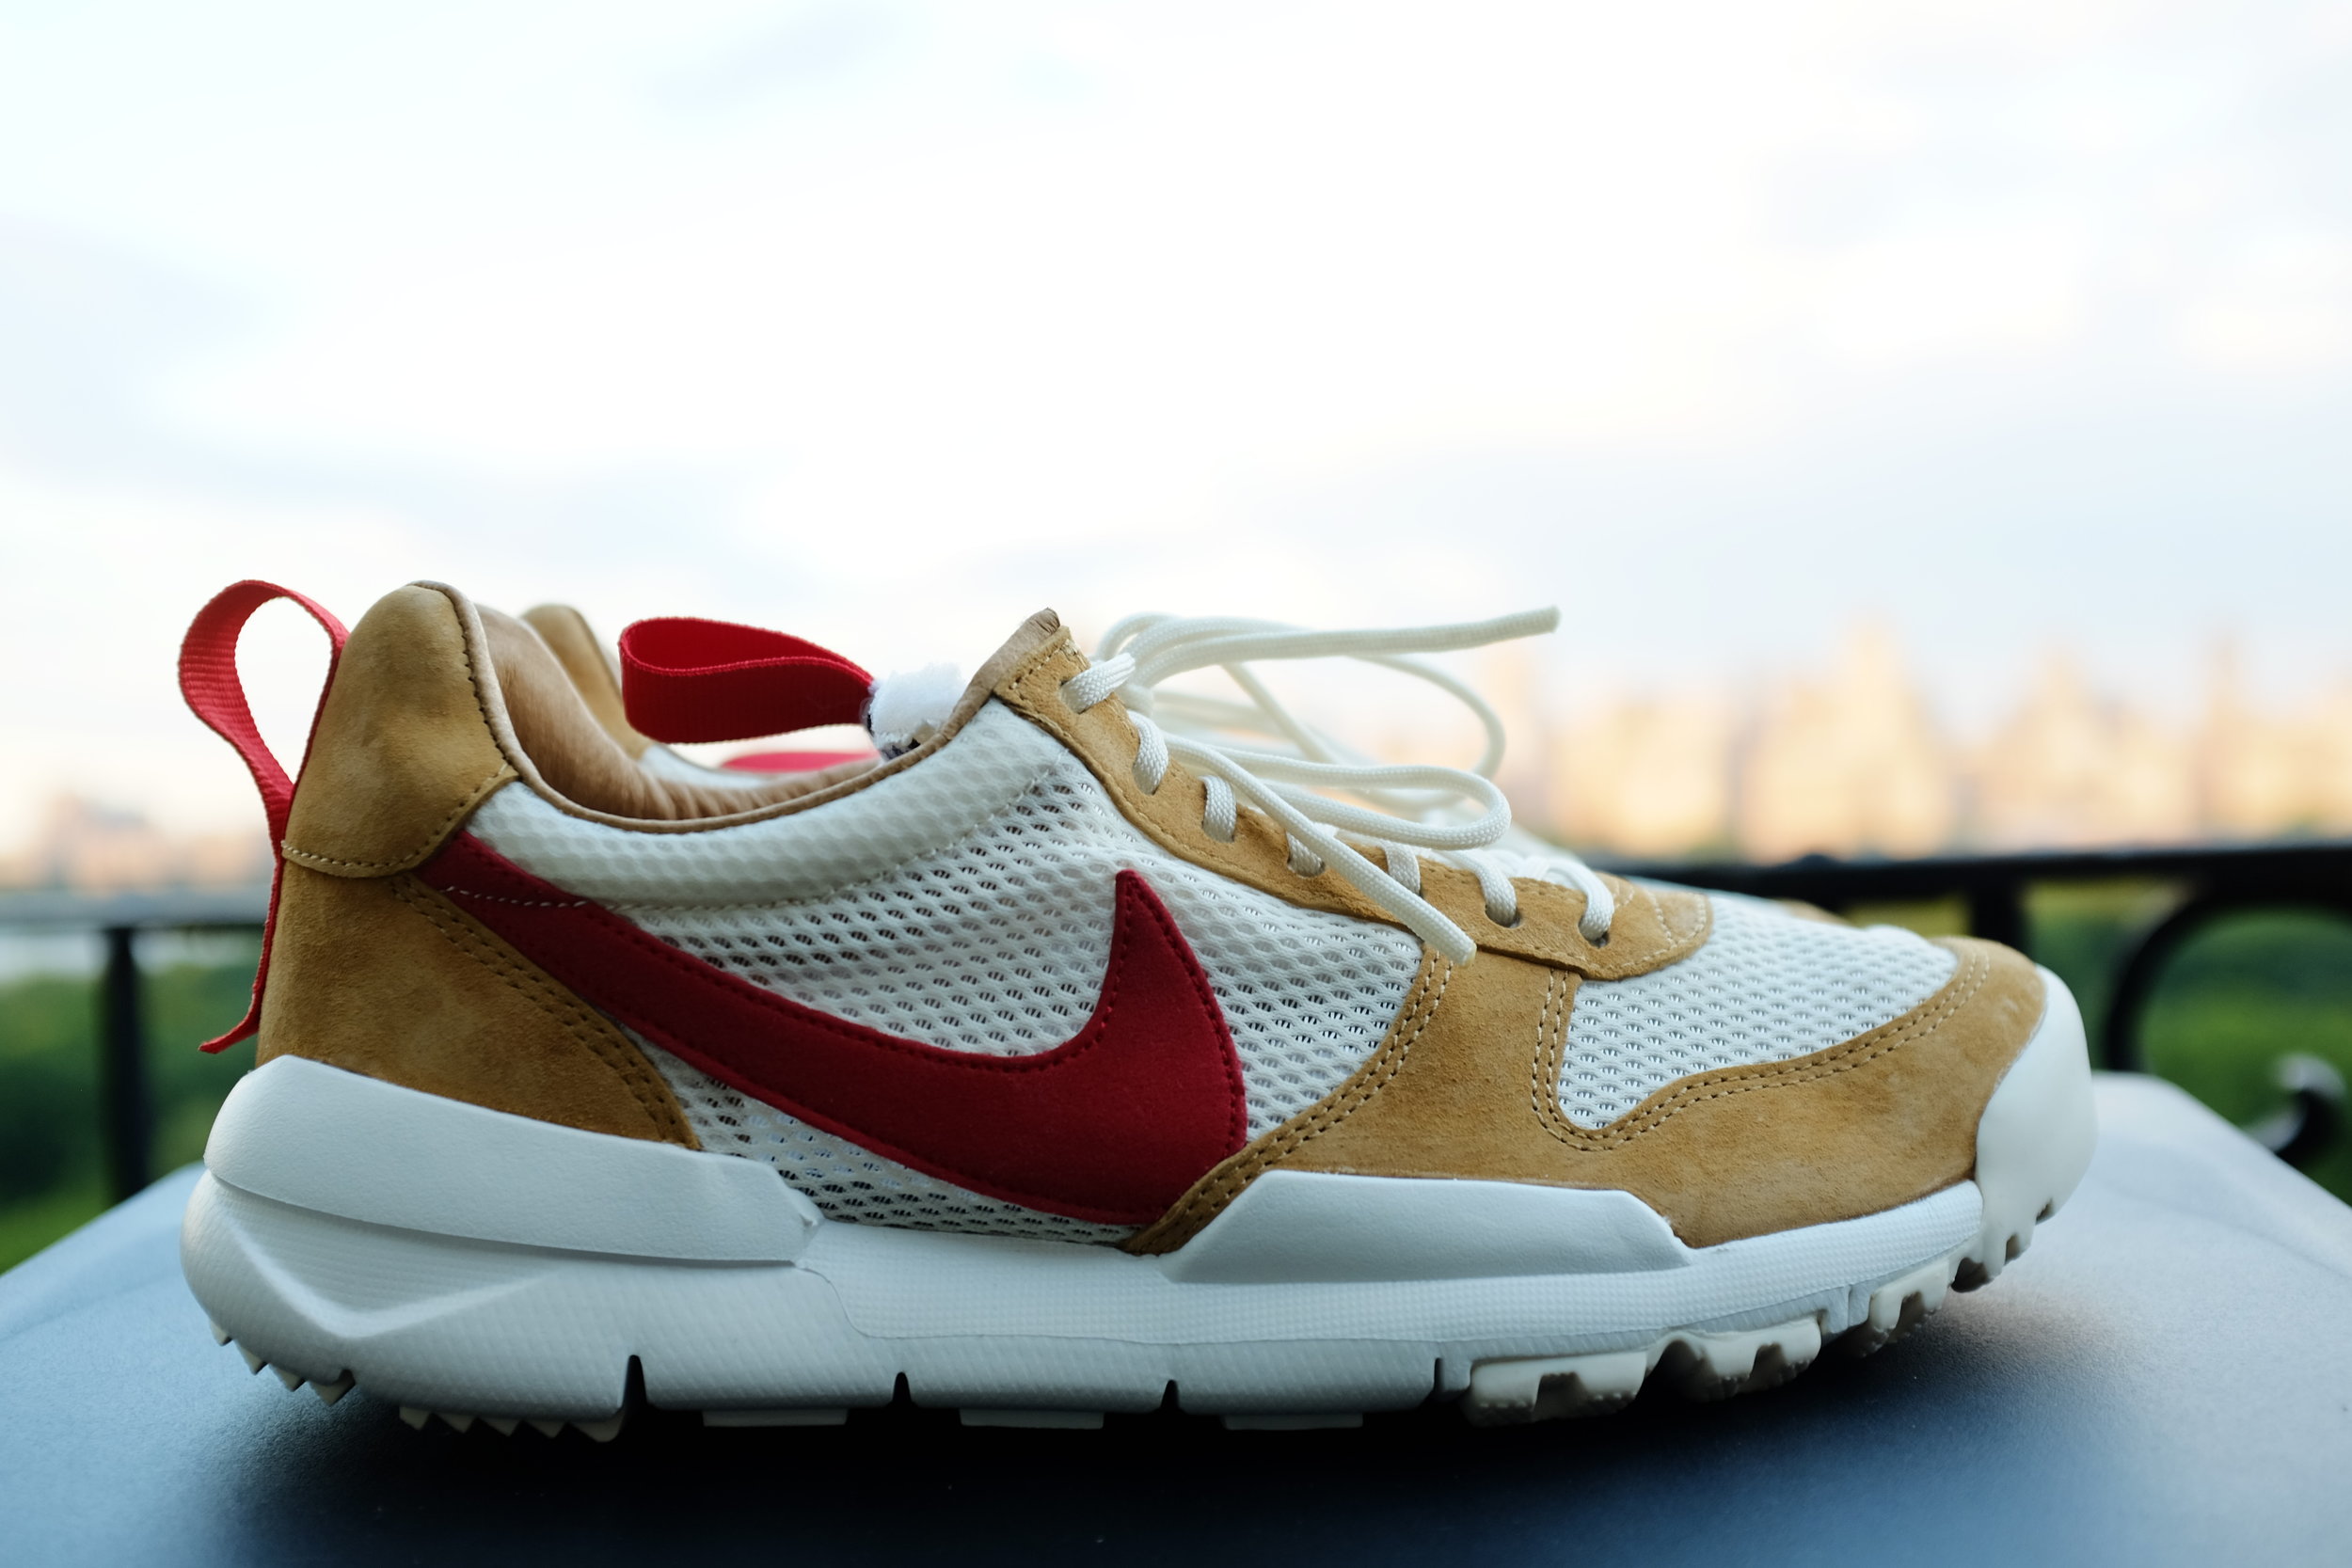 Nike Tom Sachs Craft Mars Yard 2.0